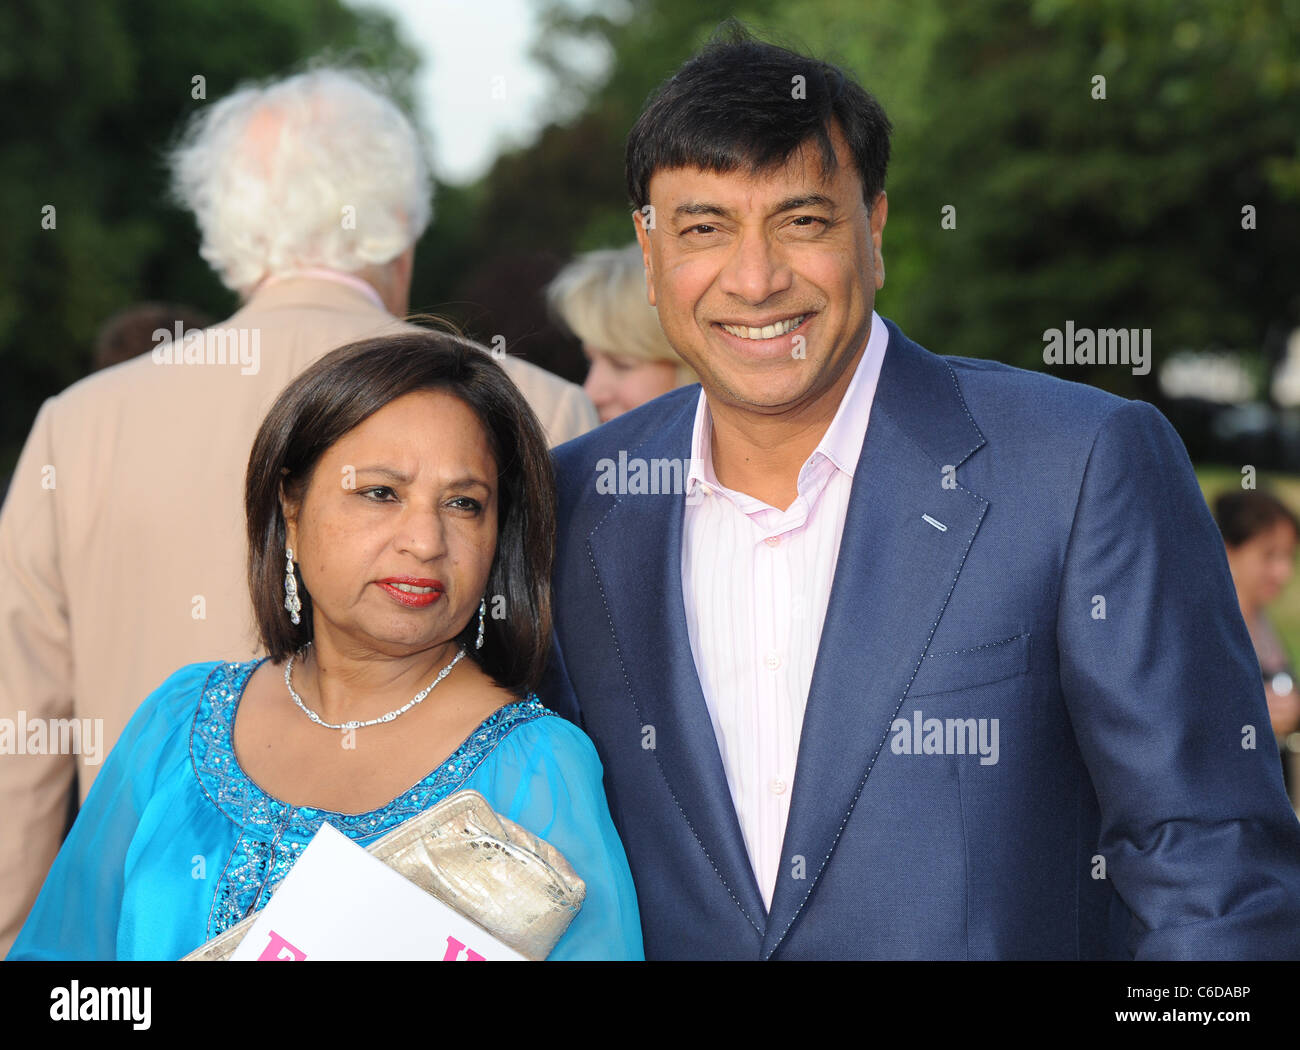 Lakshmi Mittal: Family night at the fight: Lakshmi Mittal hangs